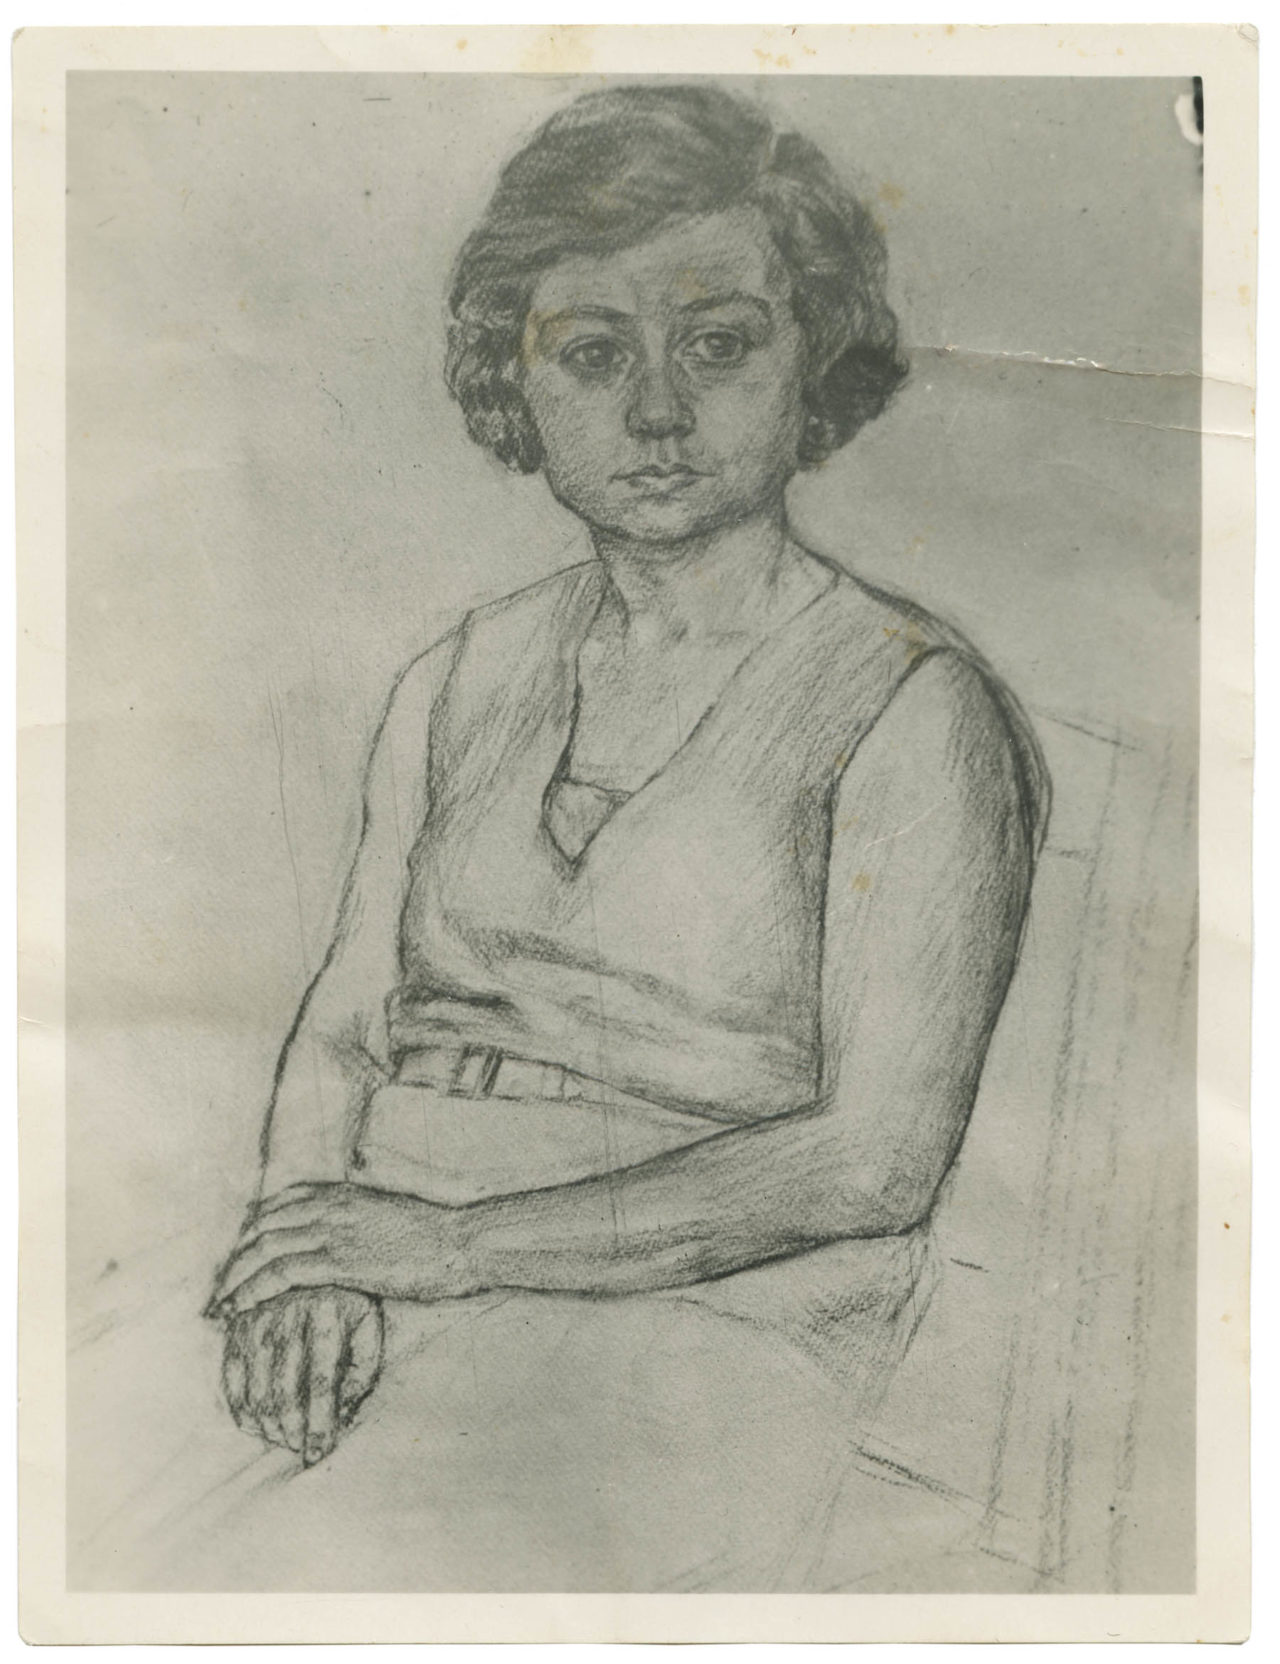 Portrait sketch of a woman